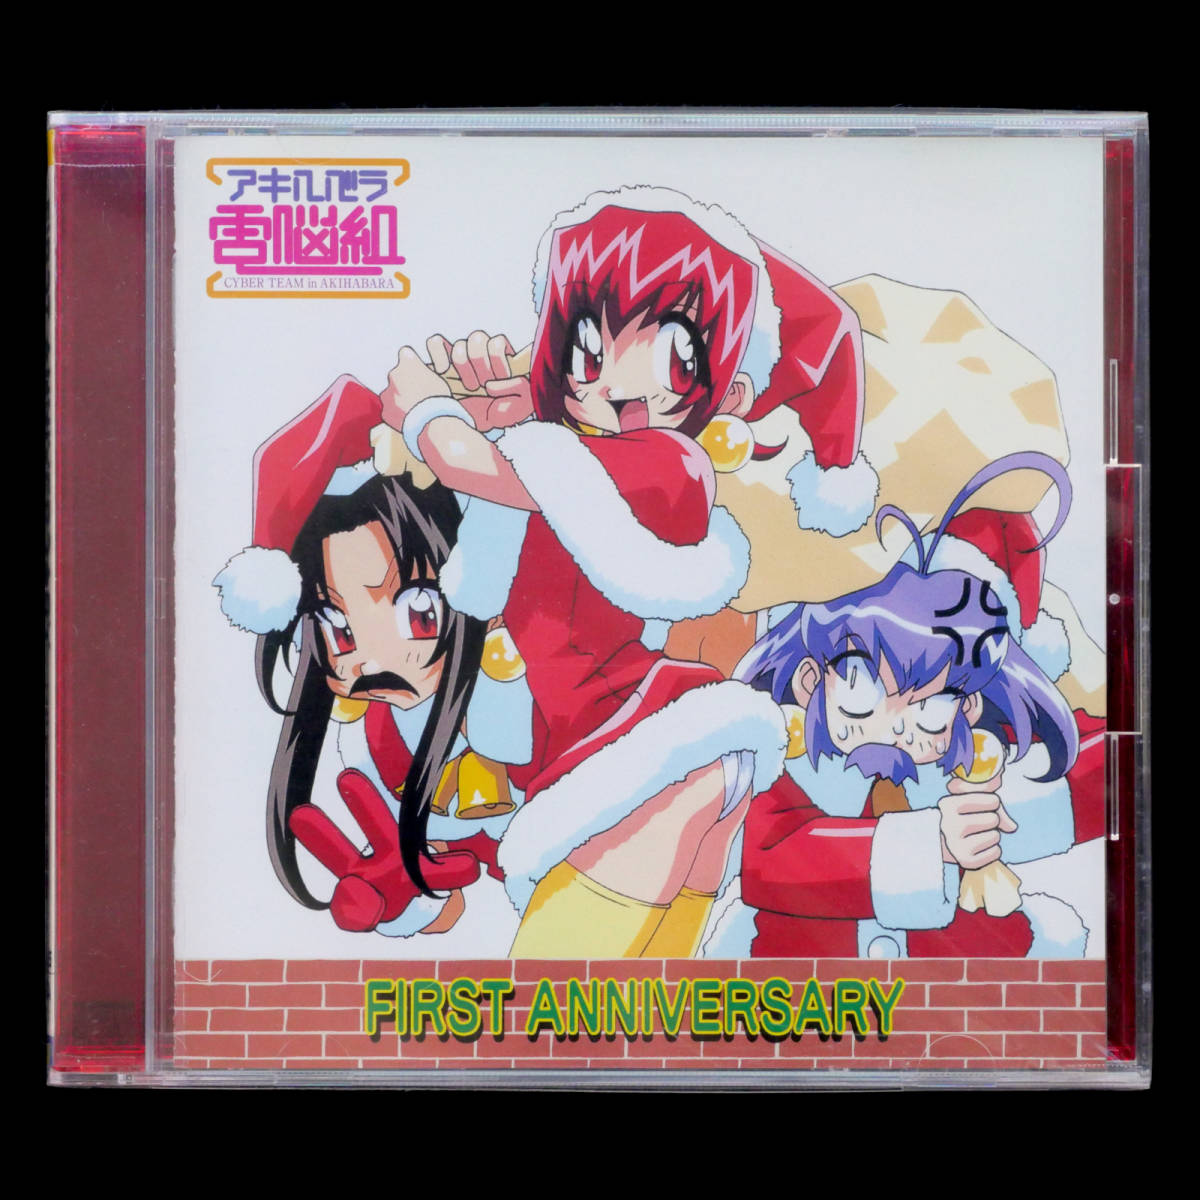 CD Akihabara Dennou Gumi саундтрек & драма CD все 11 листов одиночный CD все 3 листов CDBOOK комплект 